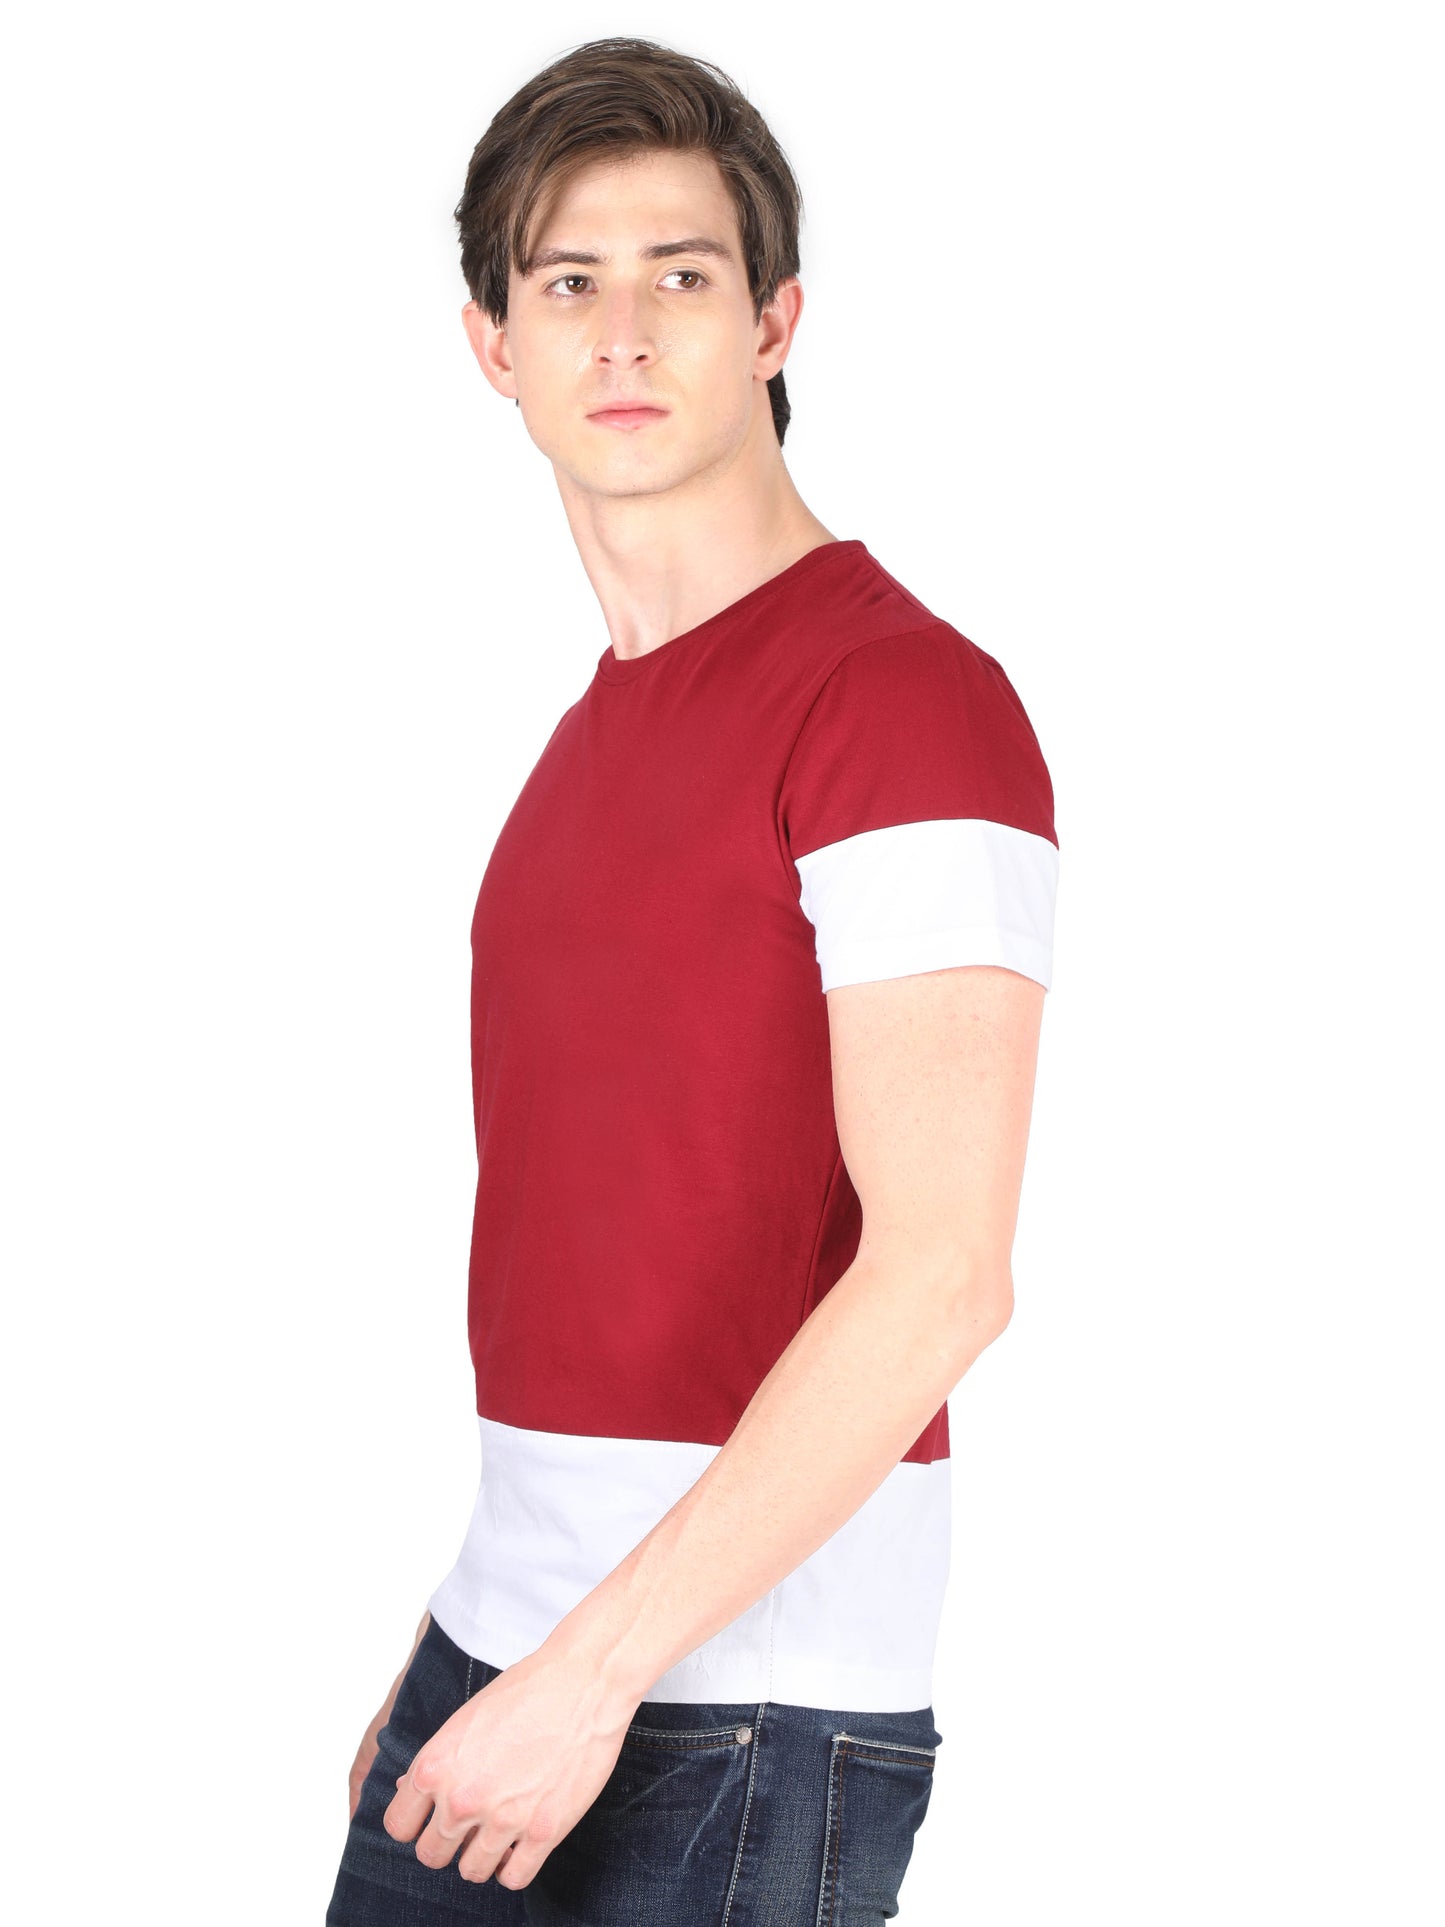 Men's Cotton Round Neck Color Block Half Sleeve T-Shirt